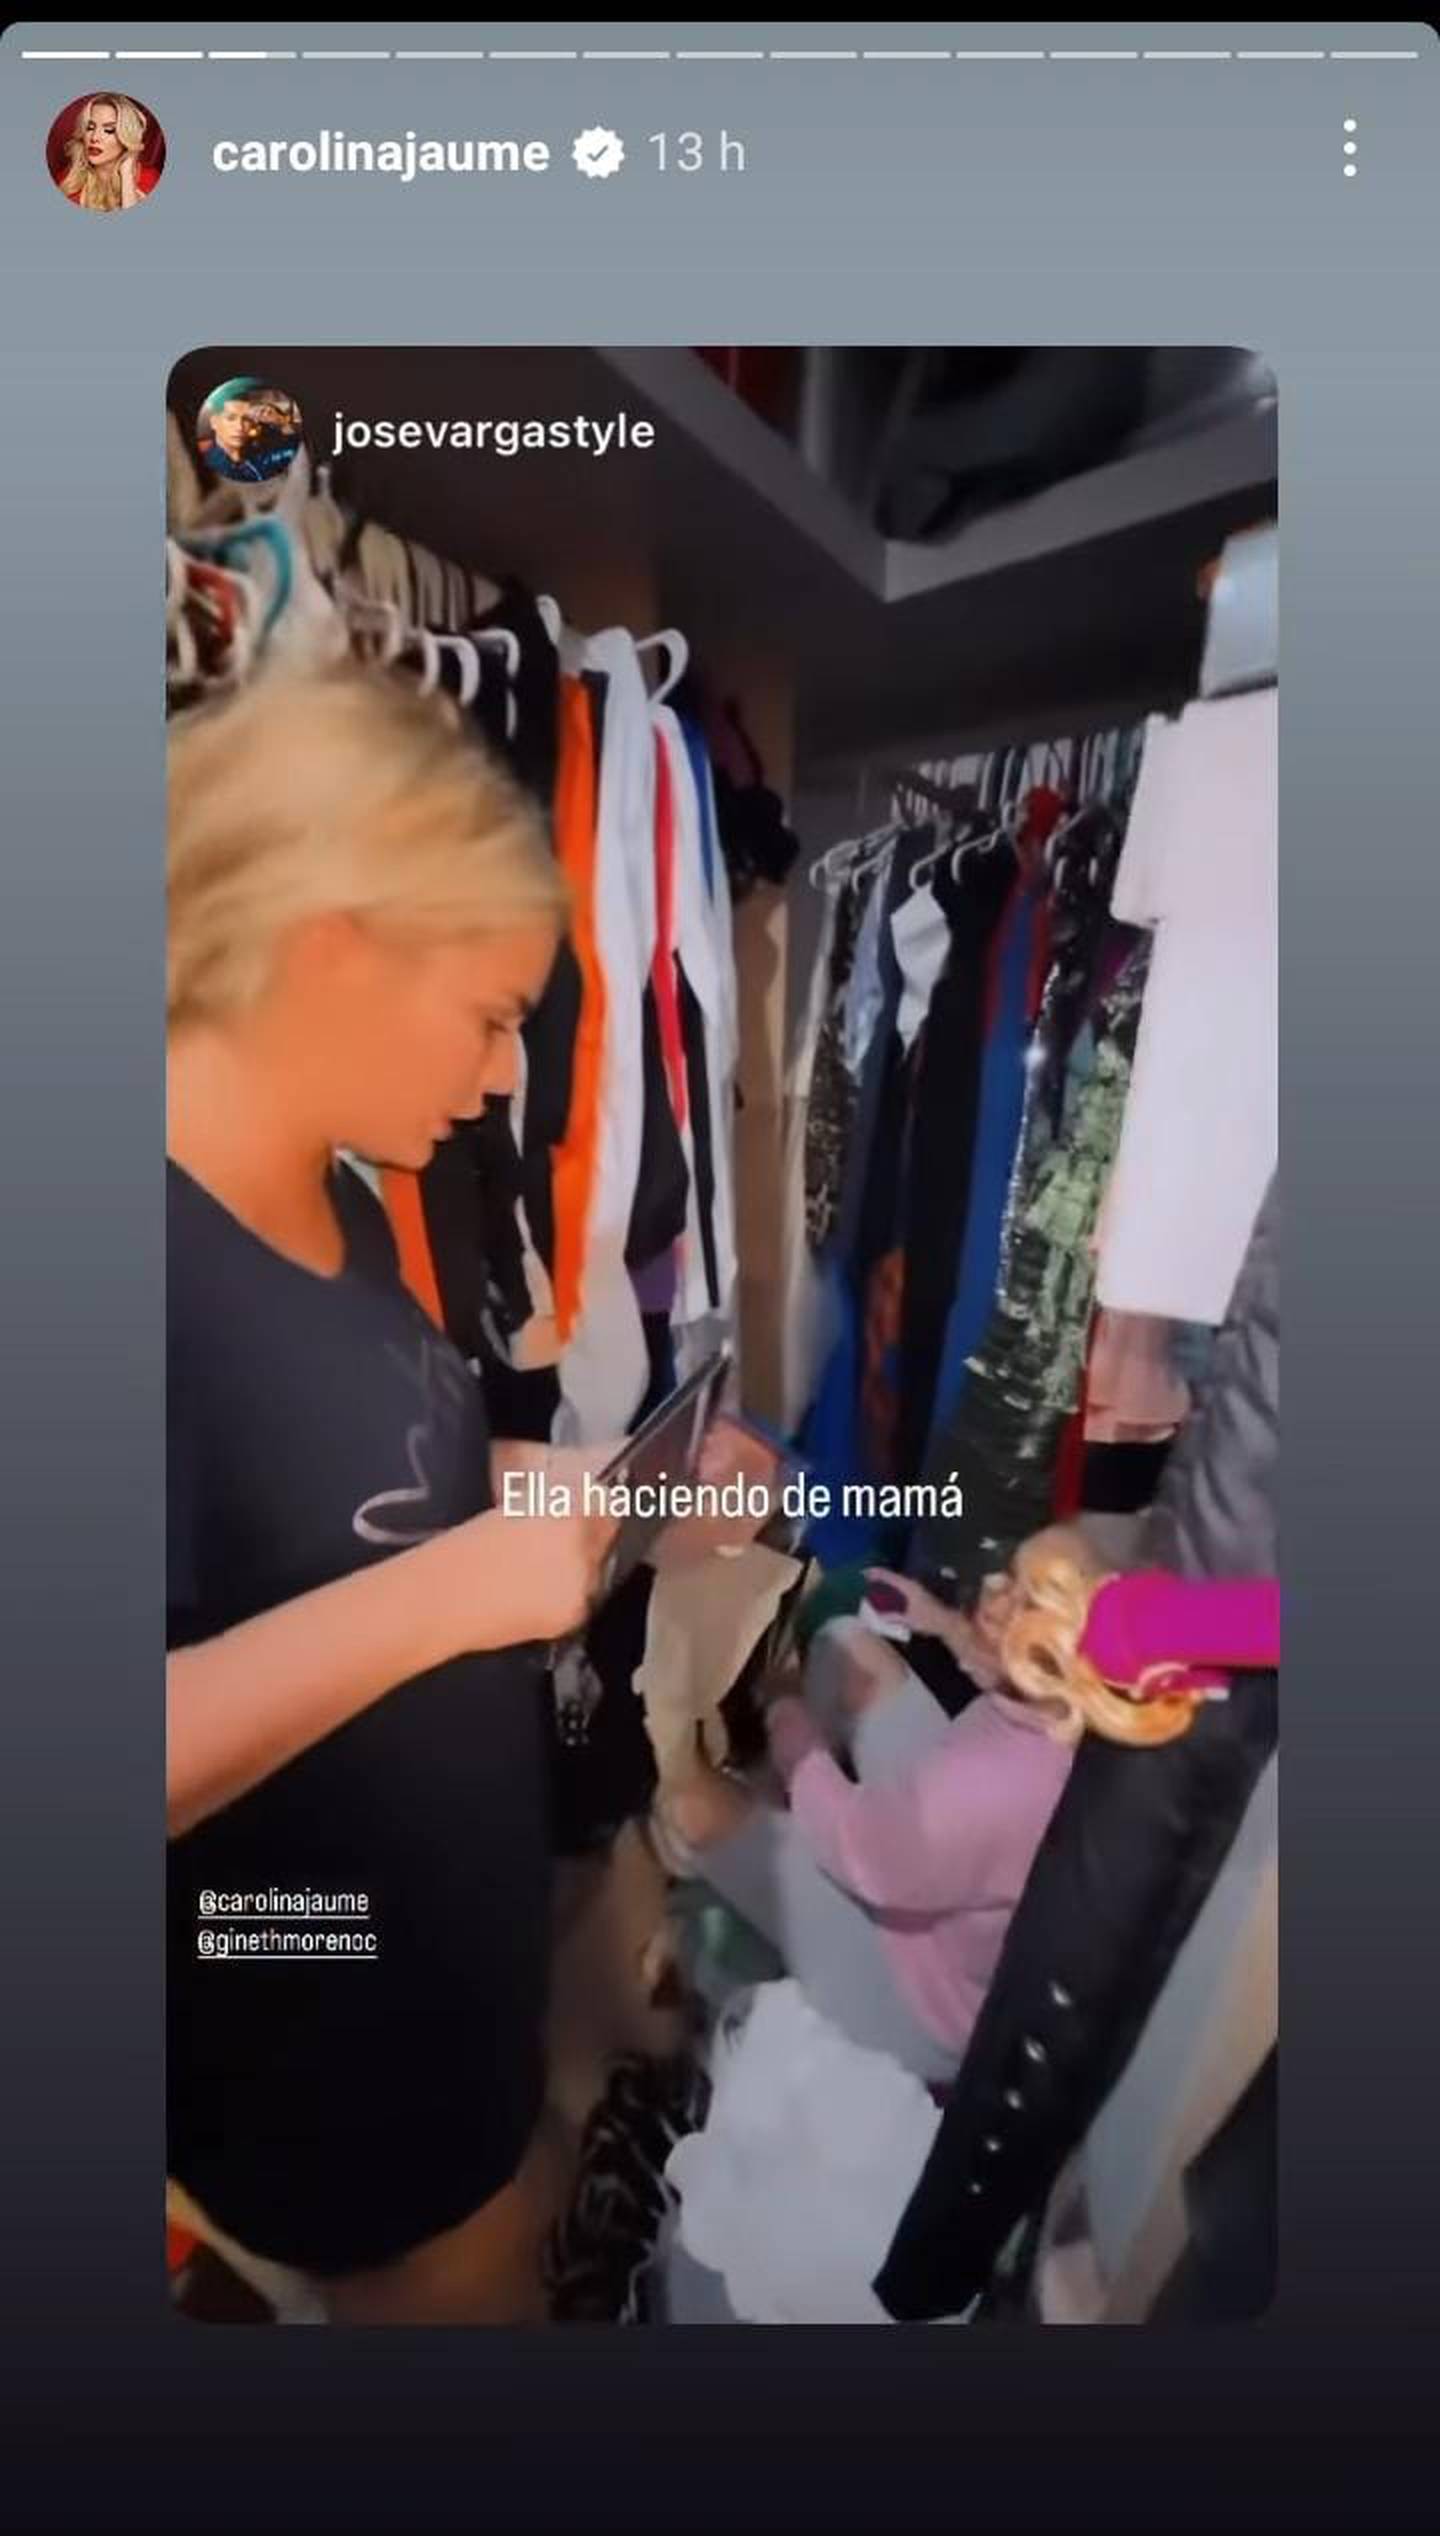 "Carolina Jaume shows off her wardrobe on Instagram".